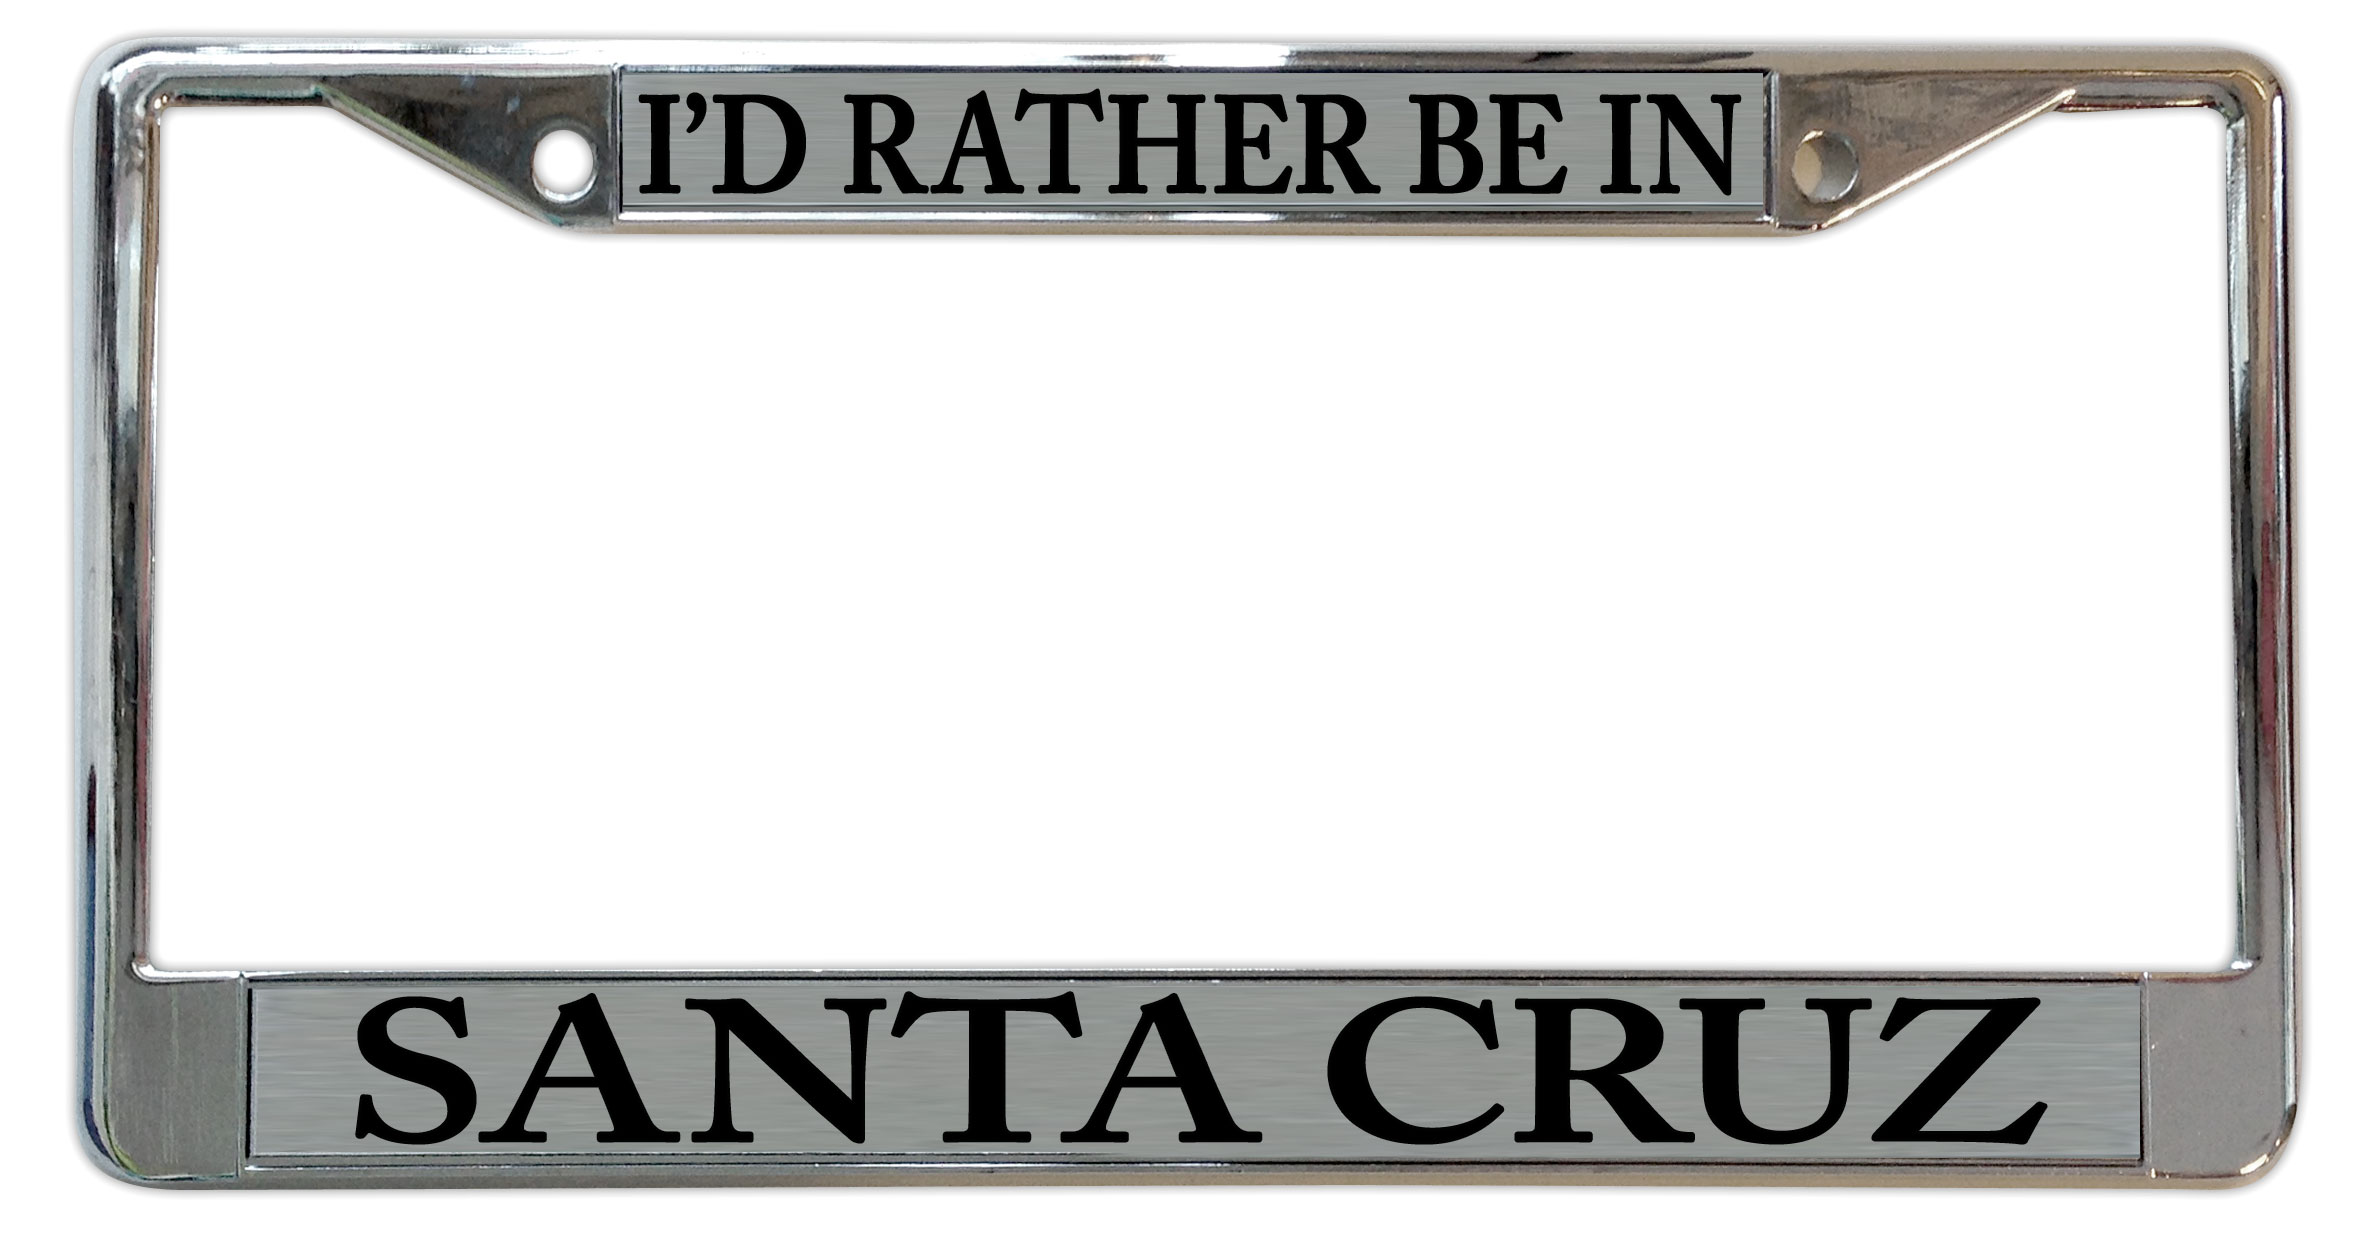 i'd rather be in santa cruz license plate frame